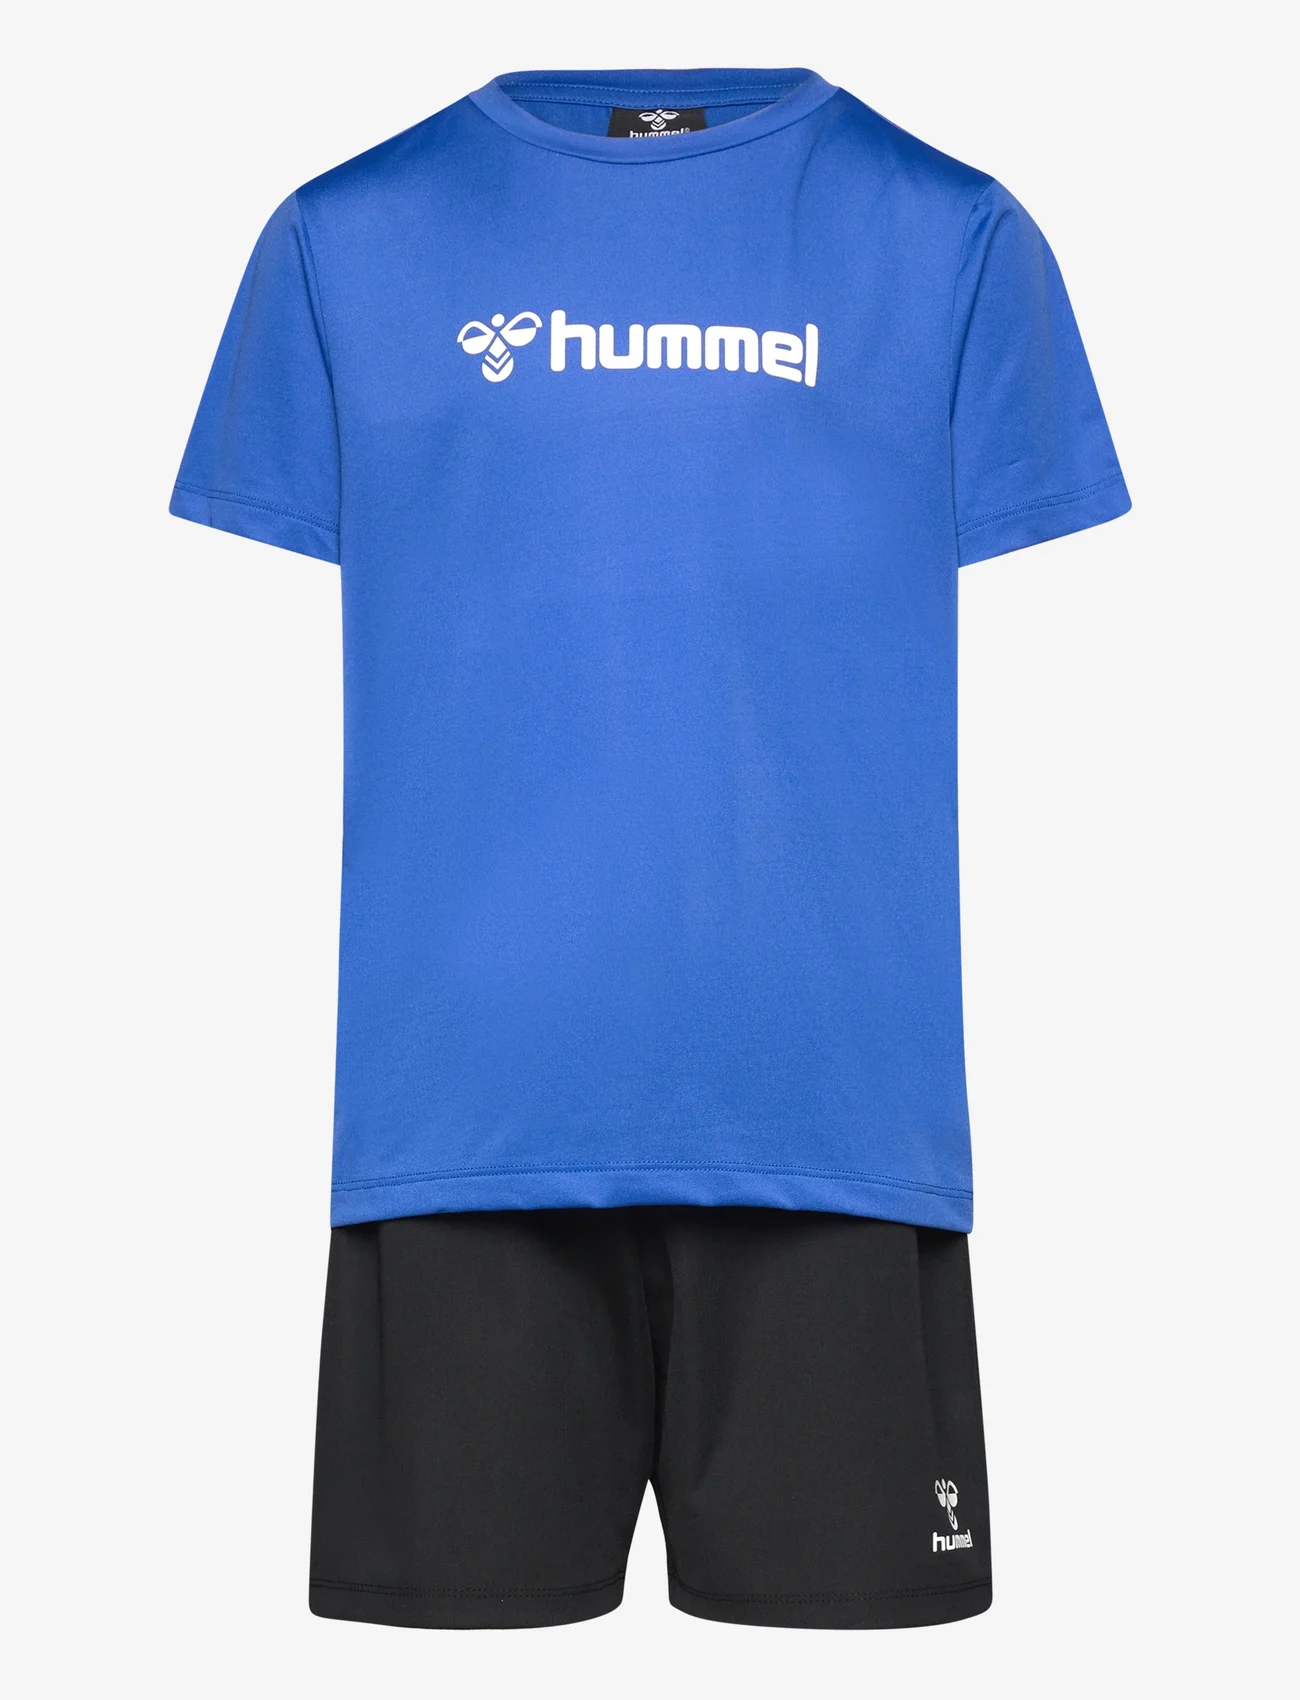 Hummel - hmlPLAG SHORTS SET - sett med kortermede t-skjorter - nebulas blue - 0